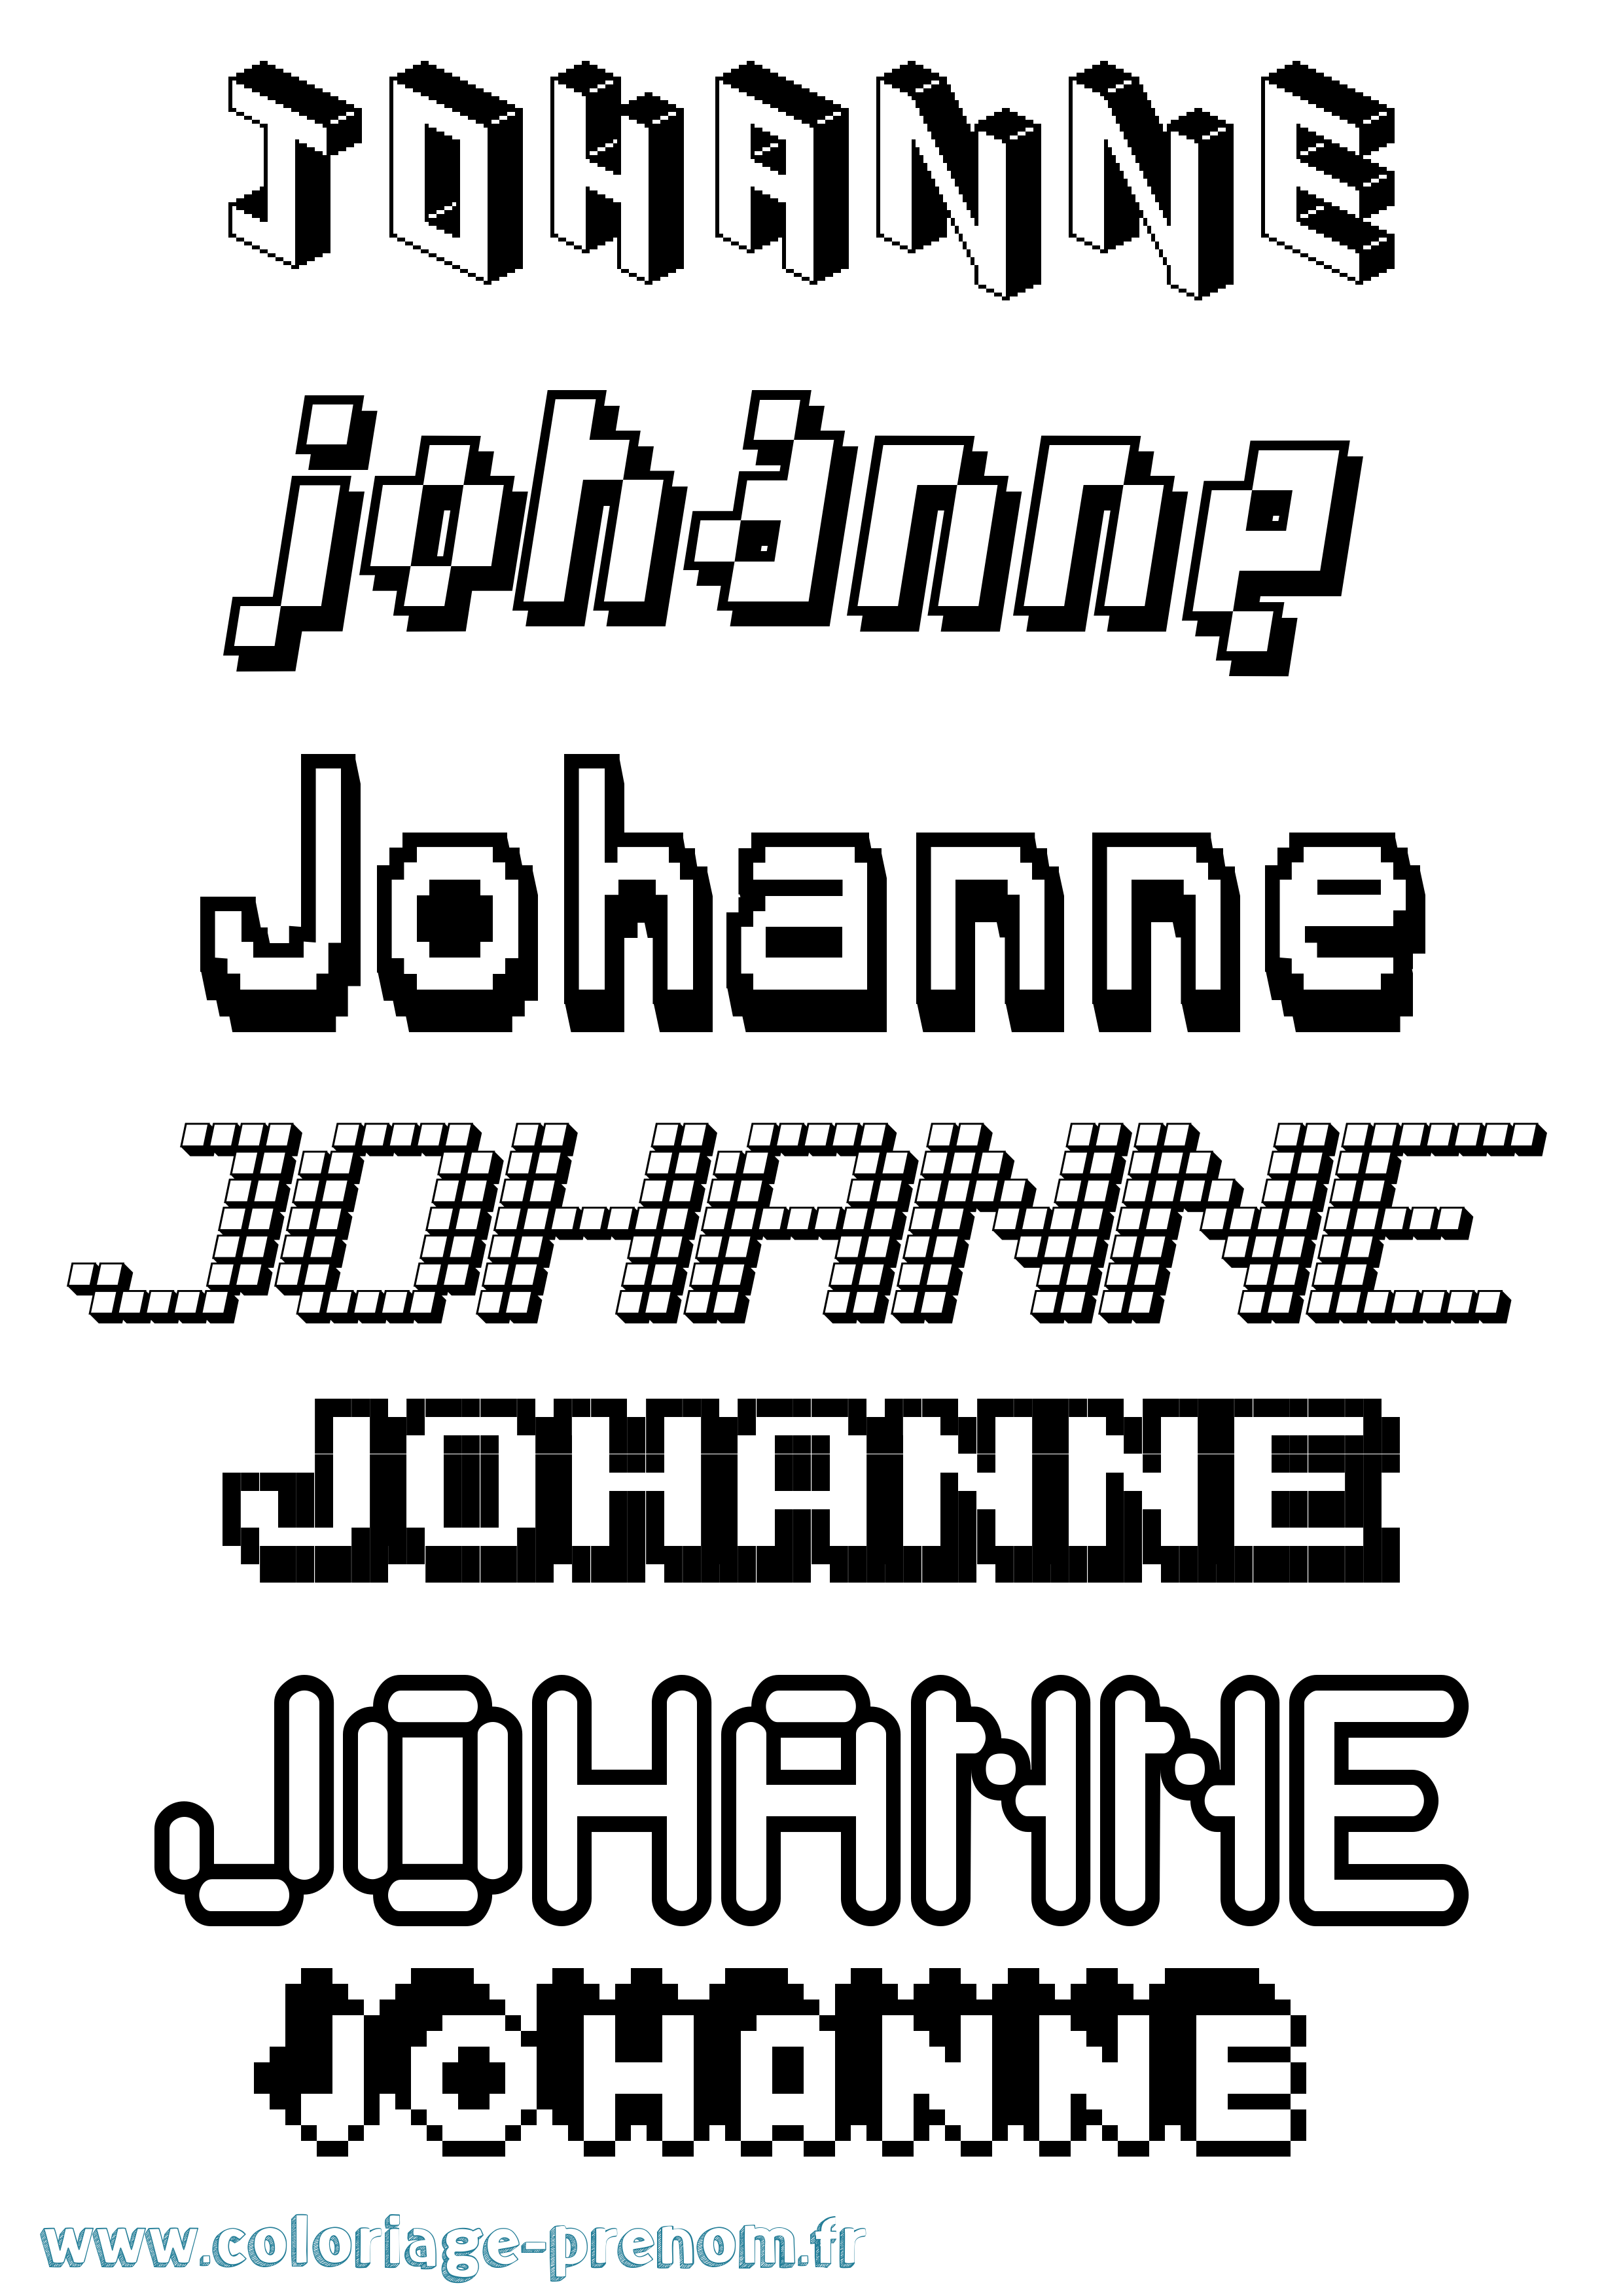 Coloriage prénom Johanne Pixel